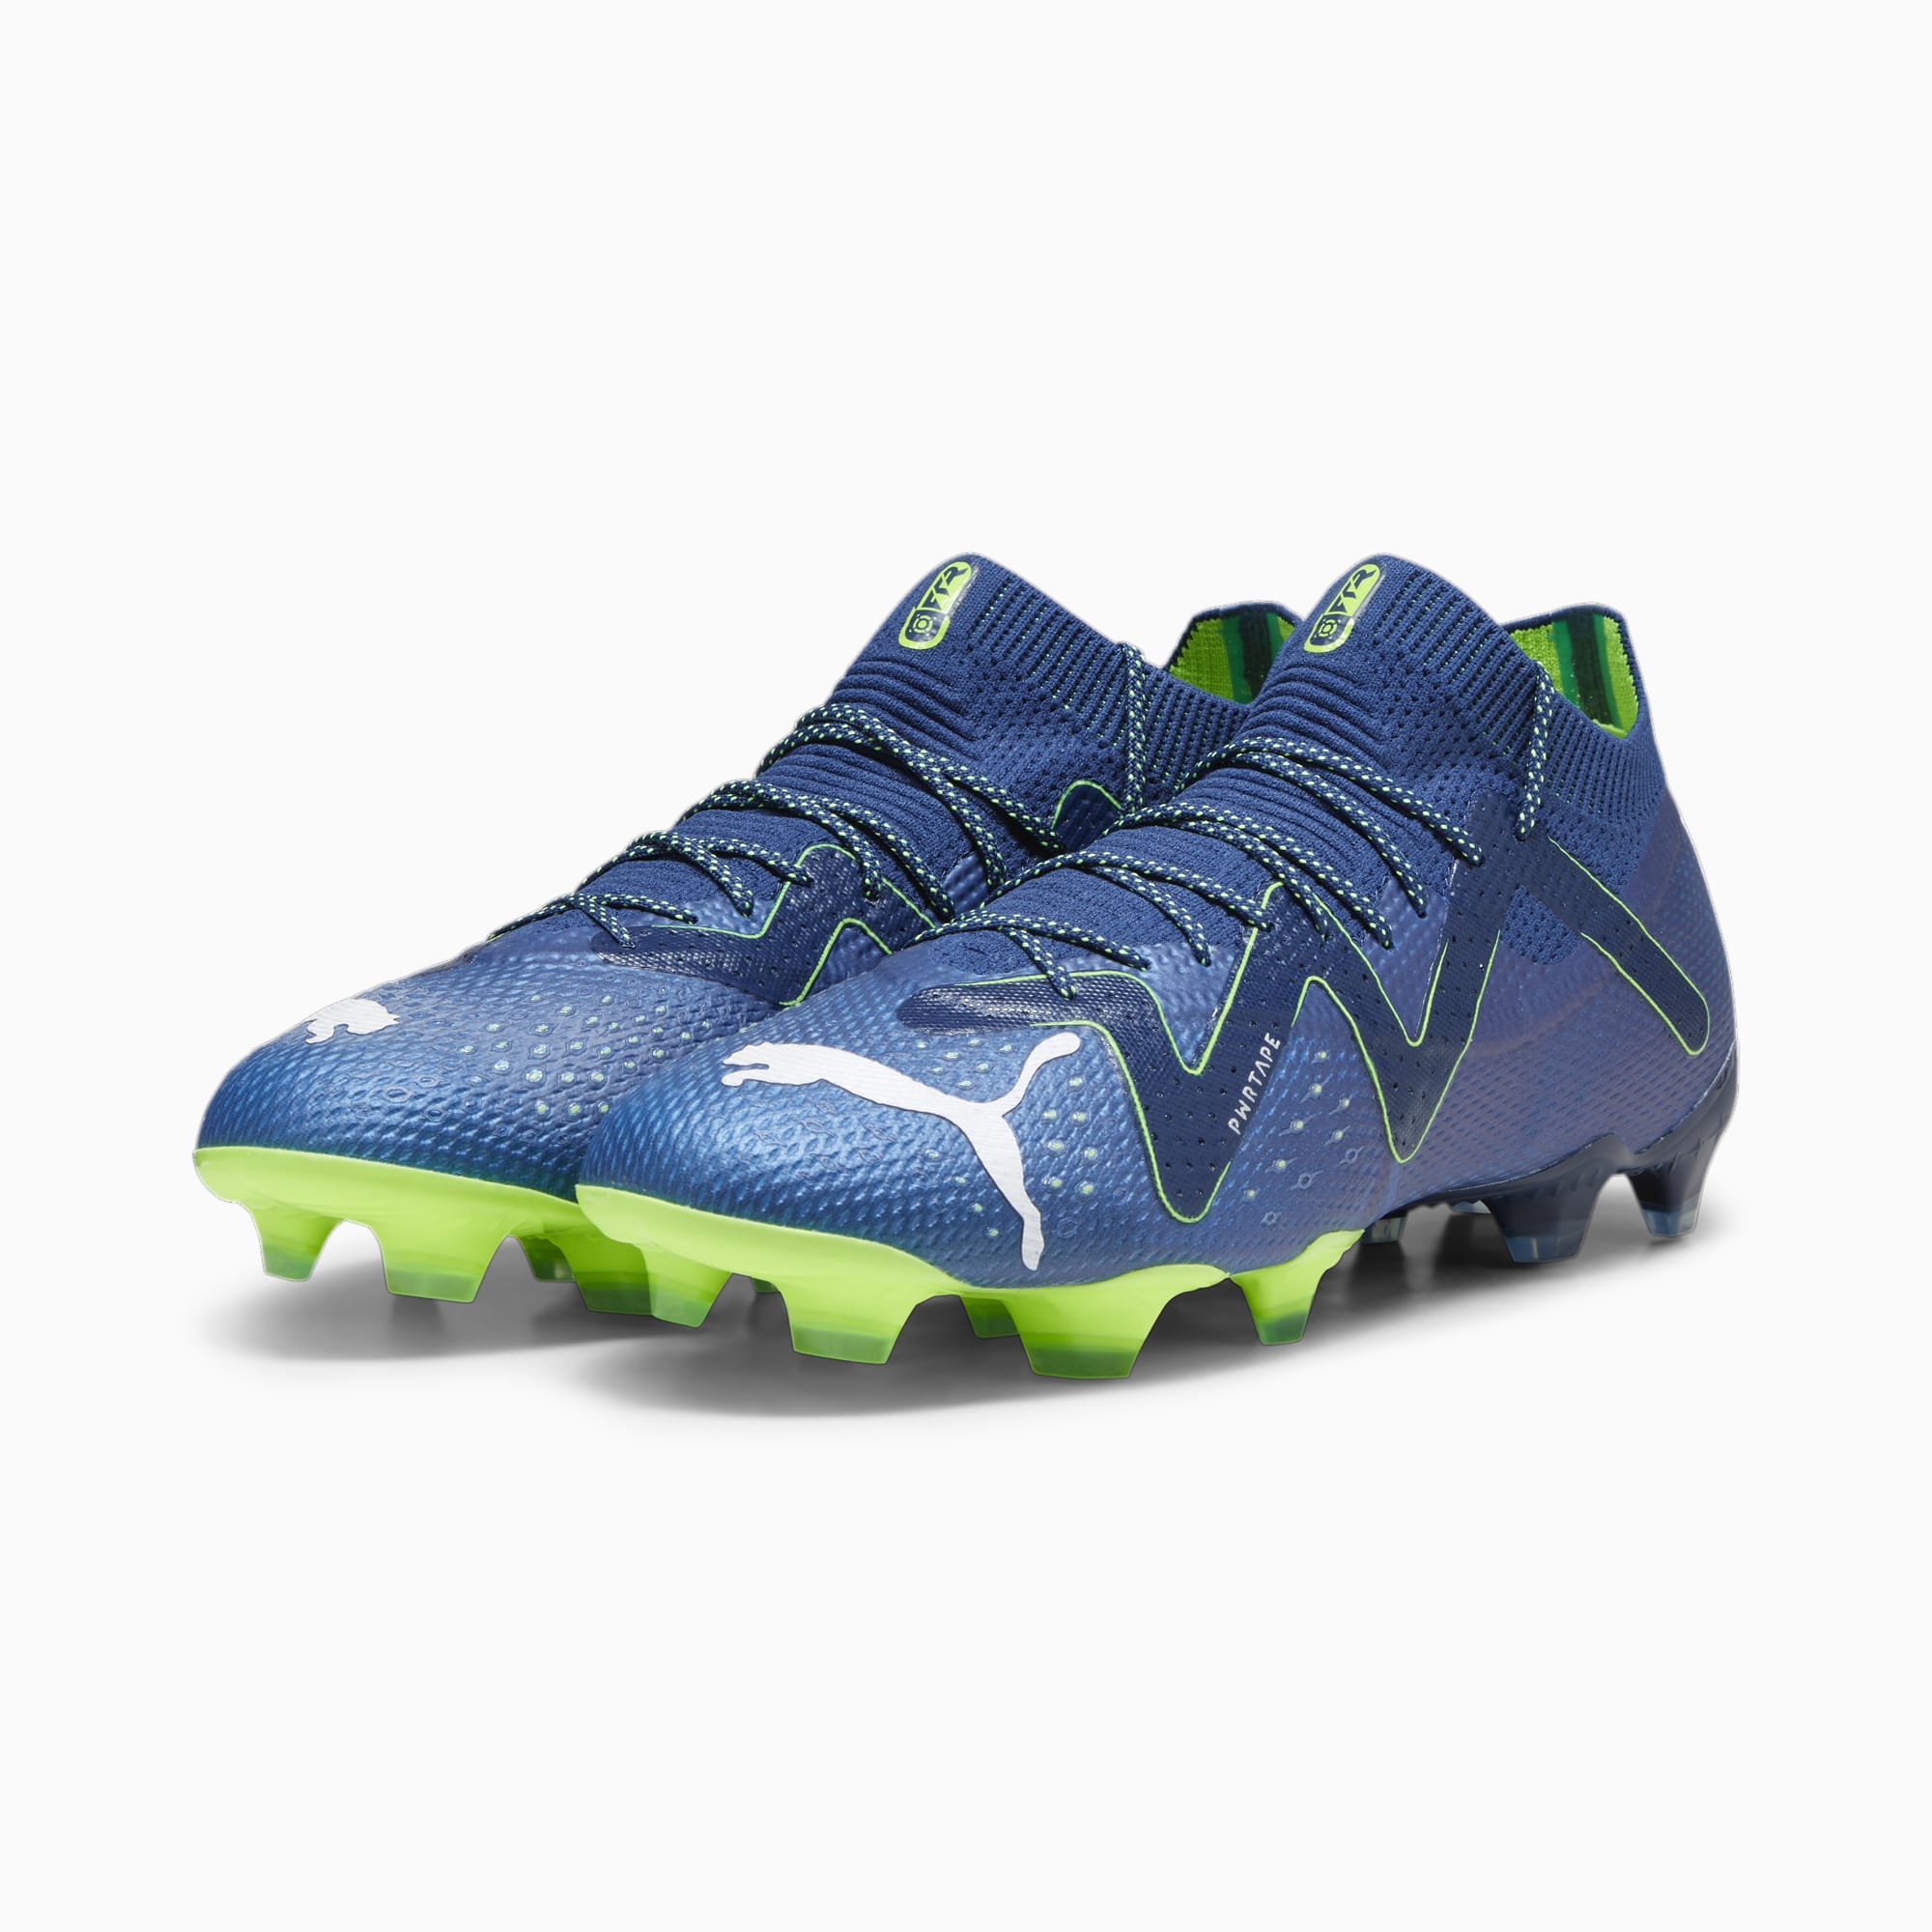 Puma Chaussures de futsal FUTURE MATCH IT pour Homme, Bleu/Vert/Blanc